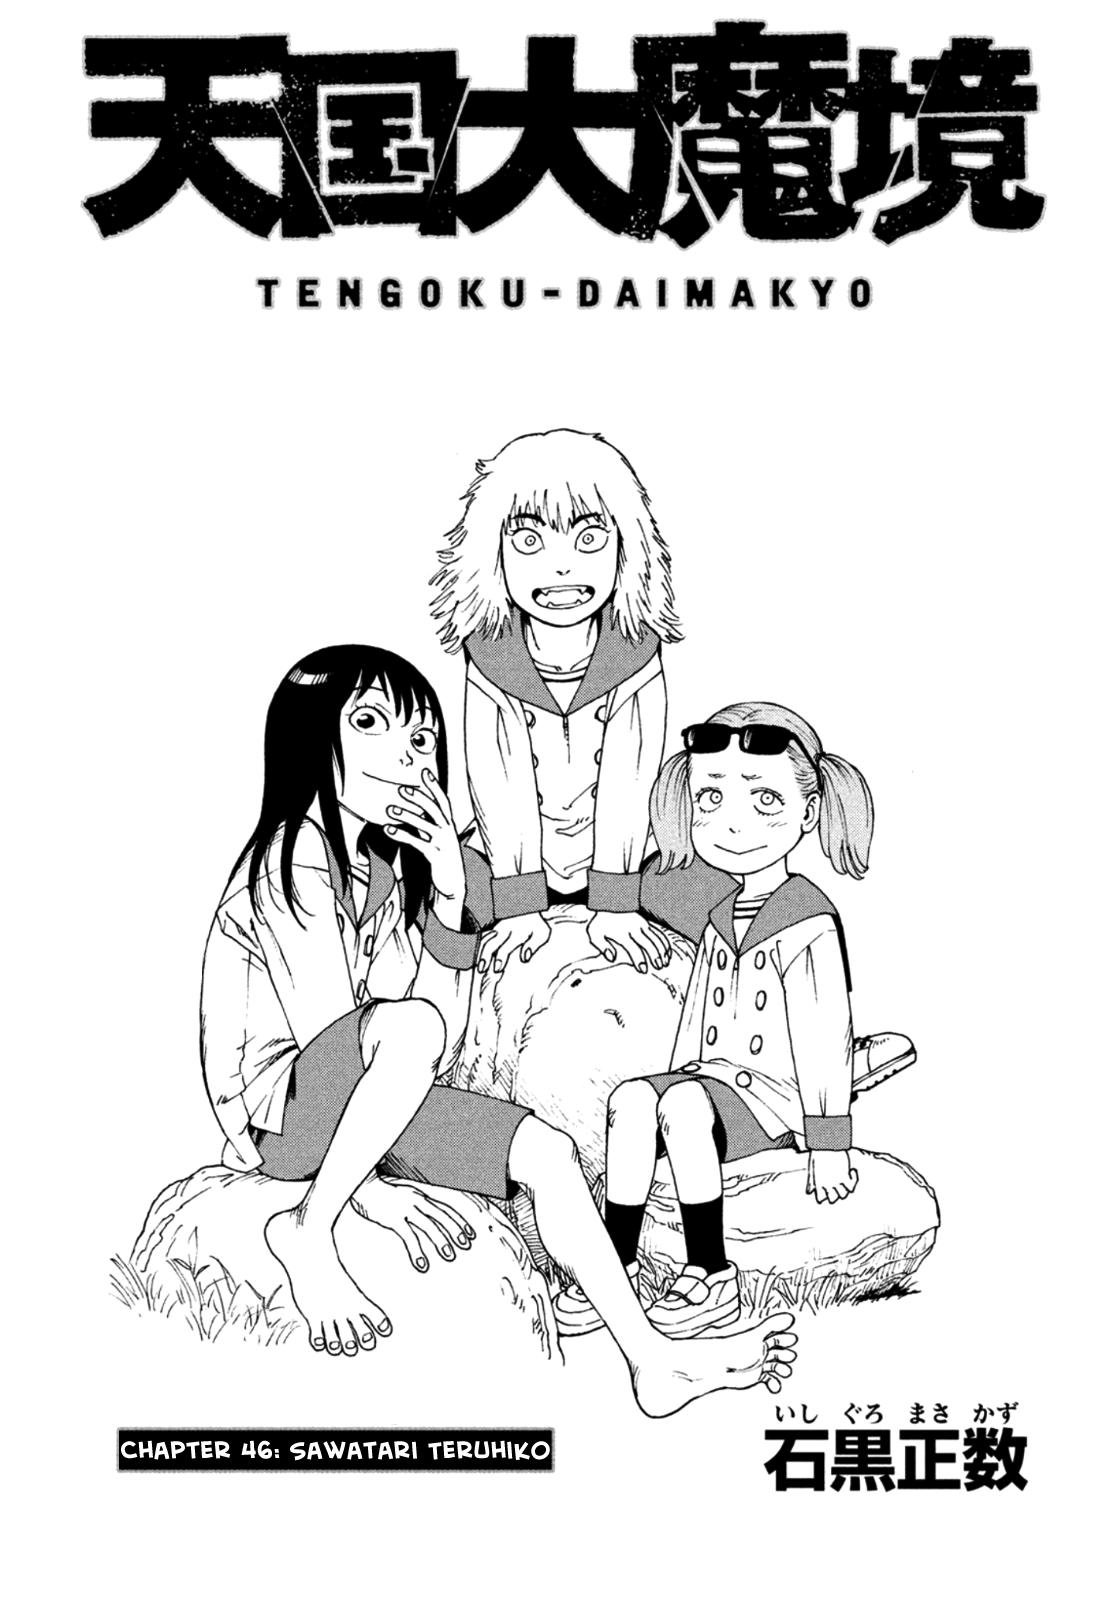 Tengoku Daimakyou Vol.8 Chapter 46: Sawatari Teruhiko page 1 - Mangakakalot